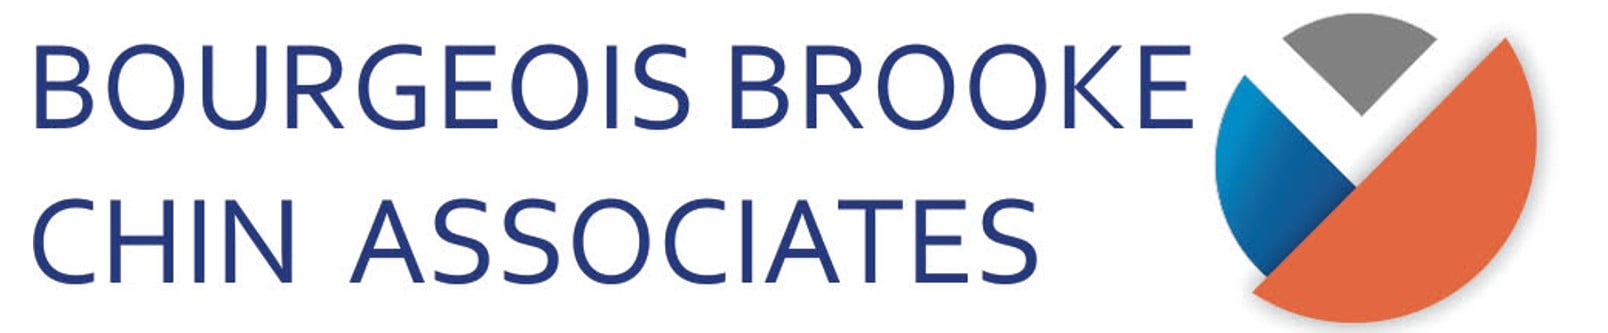 logo-bourgeois